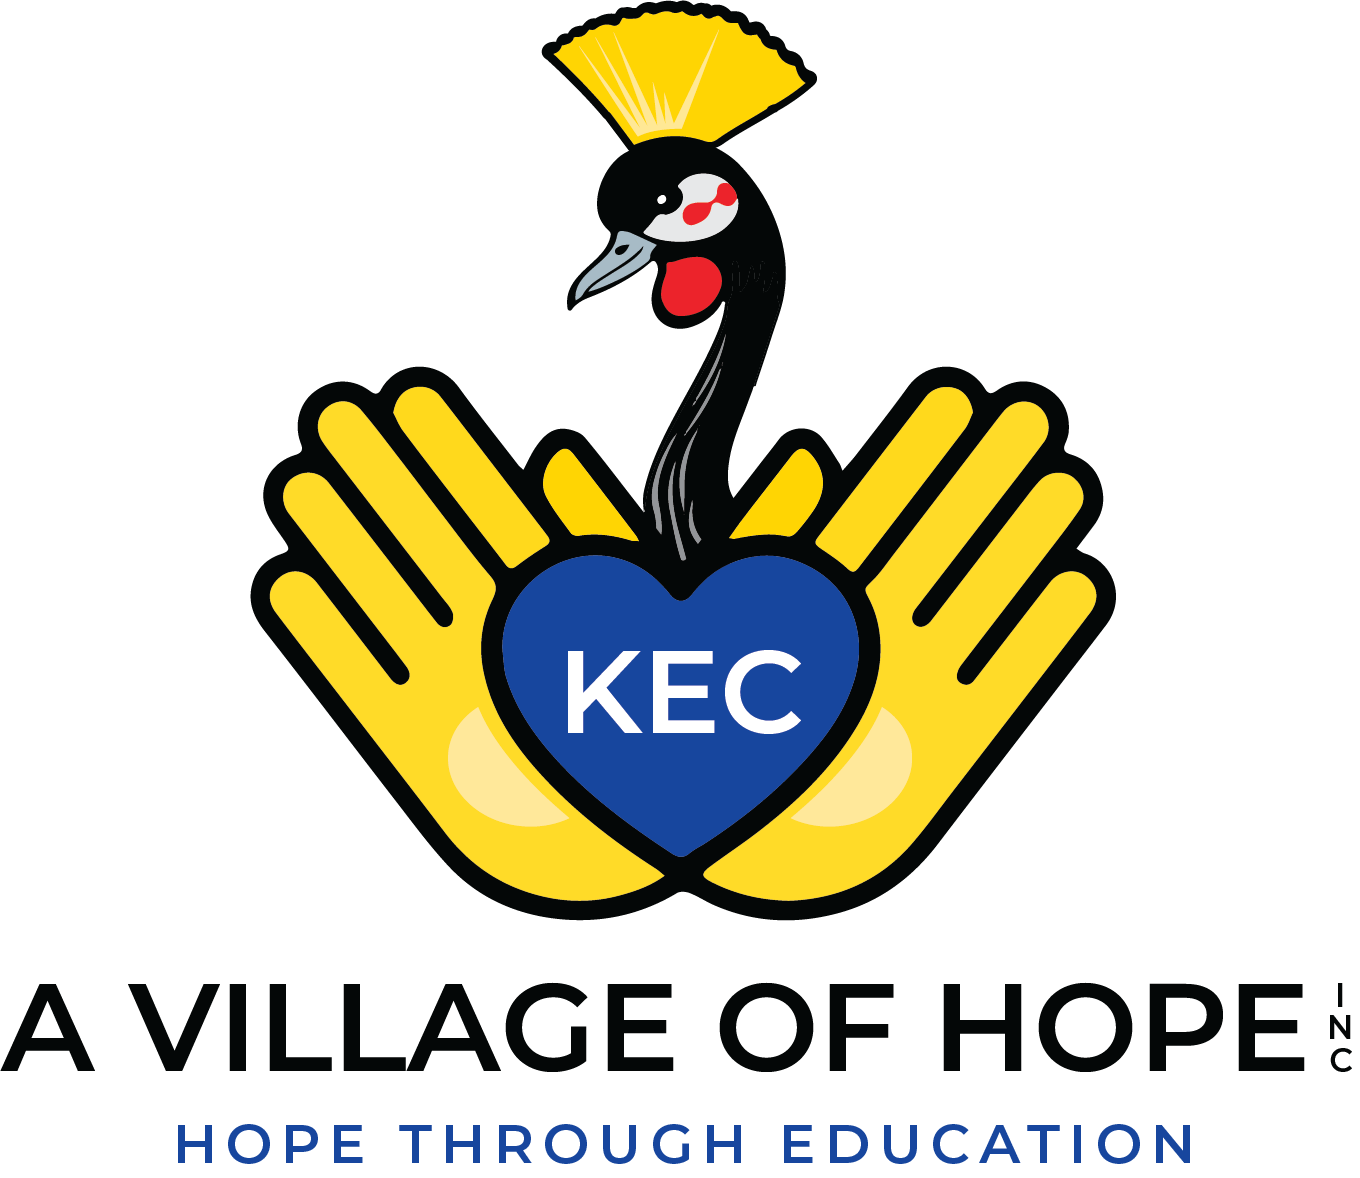 KEC - A Village of Hope